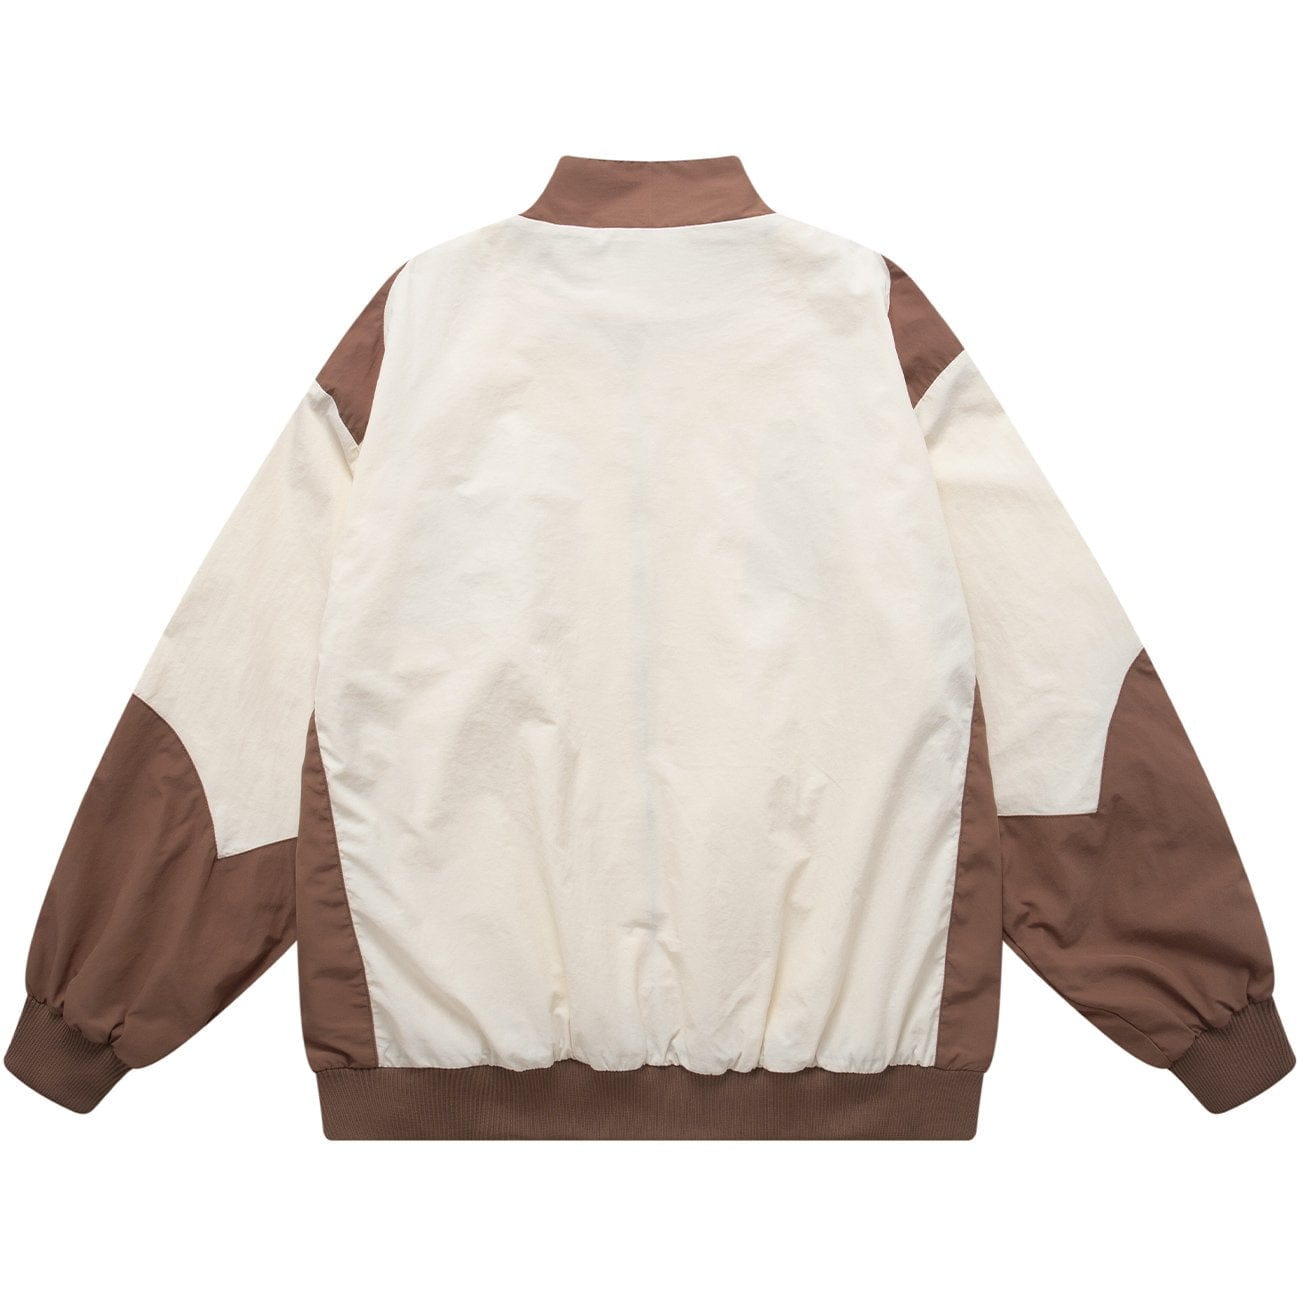 Majesda® - Letters PK Embroidered Jacket outfit ideas, streetwear fashion - majesda.com